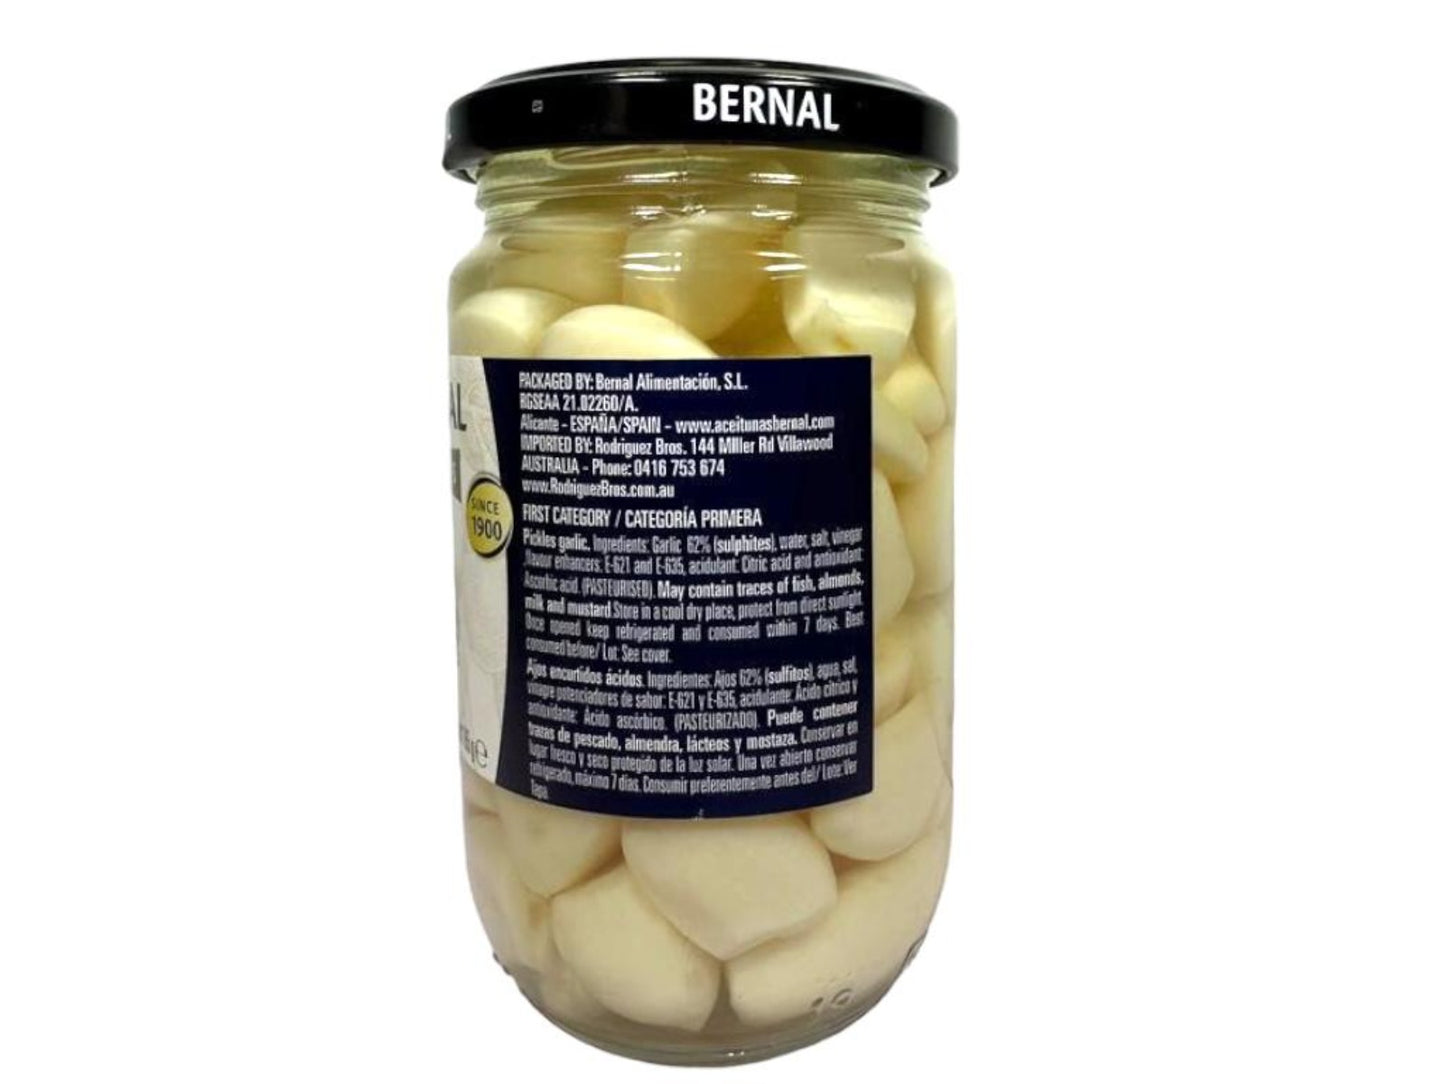 Bernal Encurtidos Ajos Spanish Pickled Garlic Twin Pack 2 x 300g